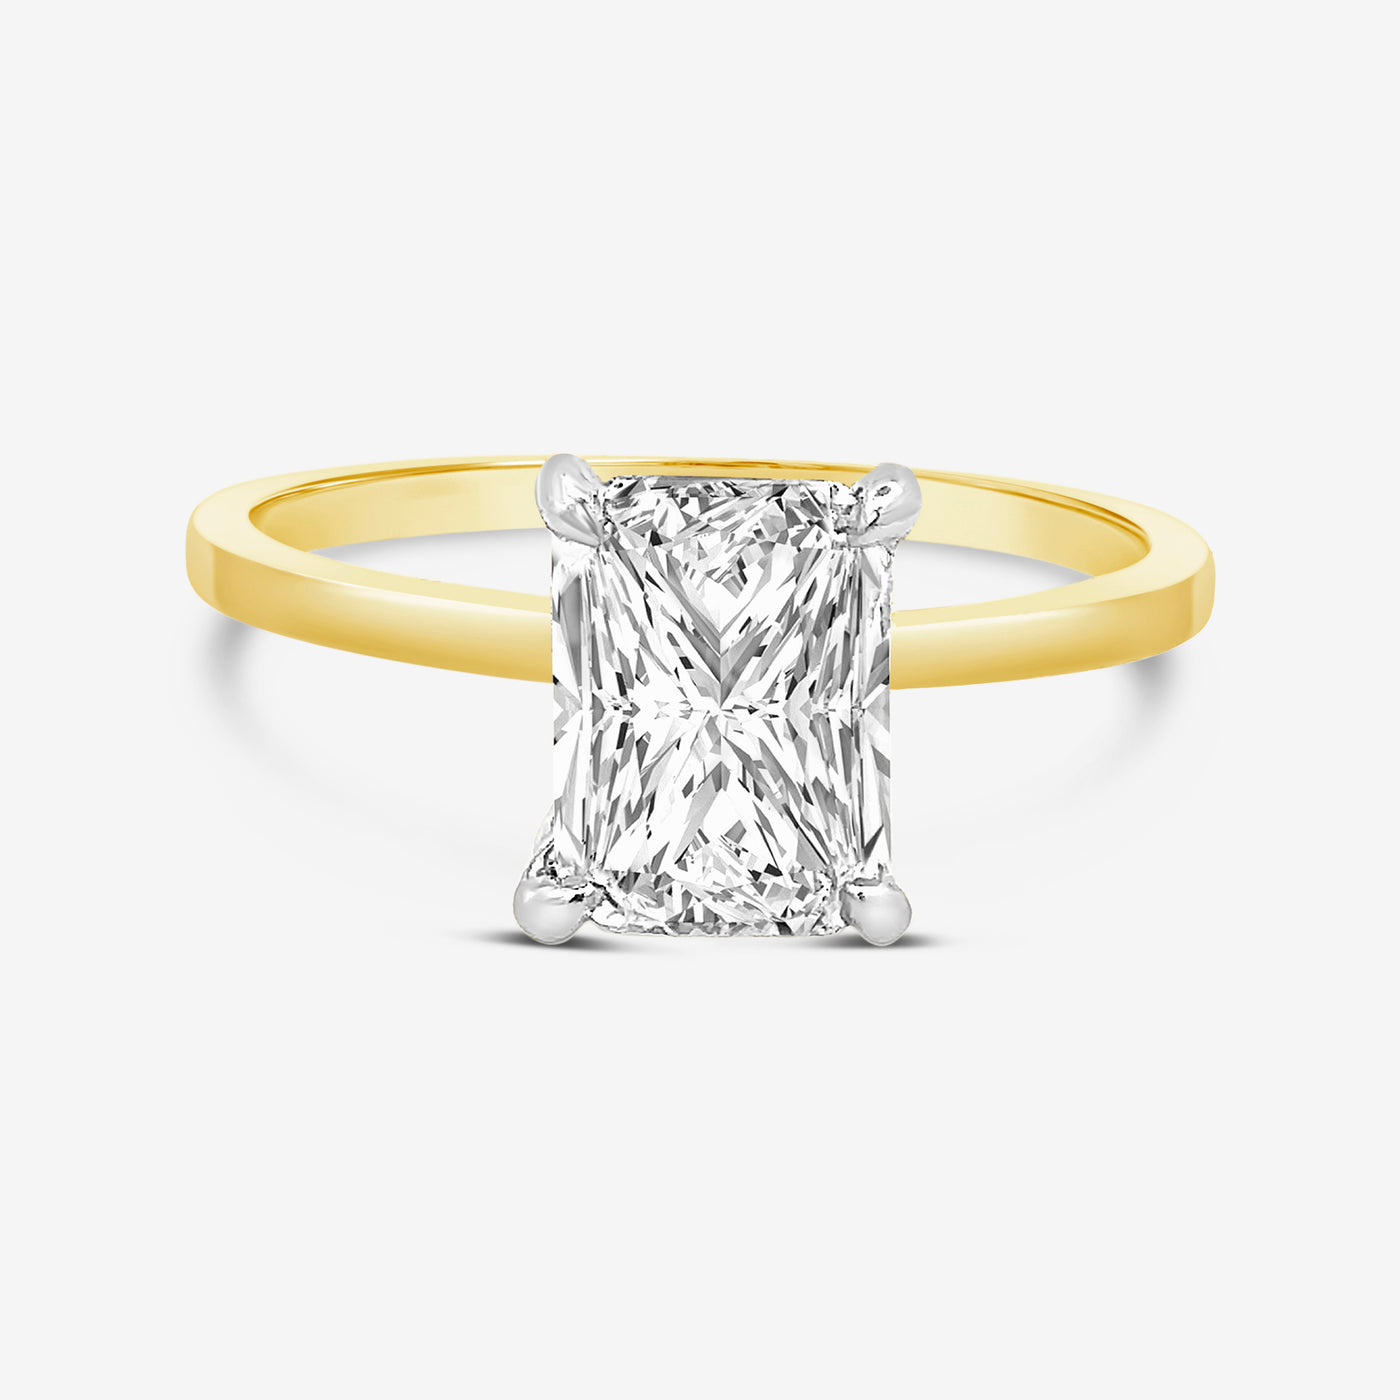 1.8 carat radiant cut diamond engagement ring